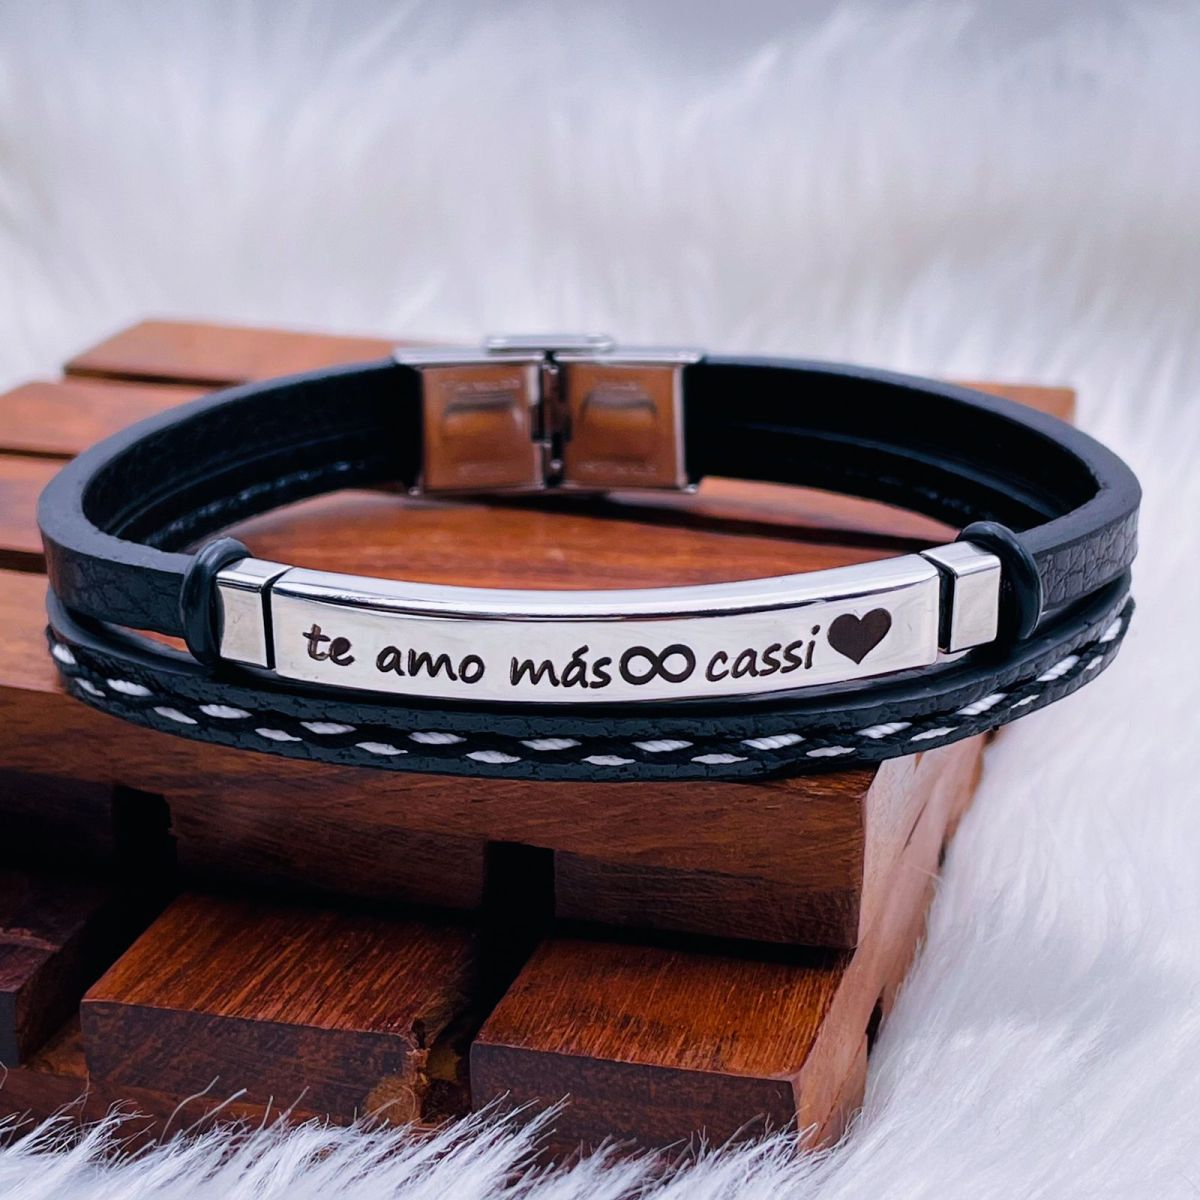 Streetsoul Tribal Metal Design Leather Bracelet Wrist Band Gift for Men.